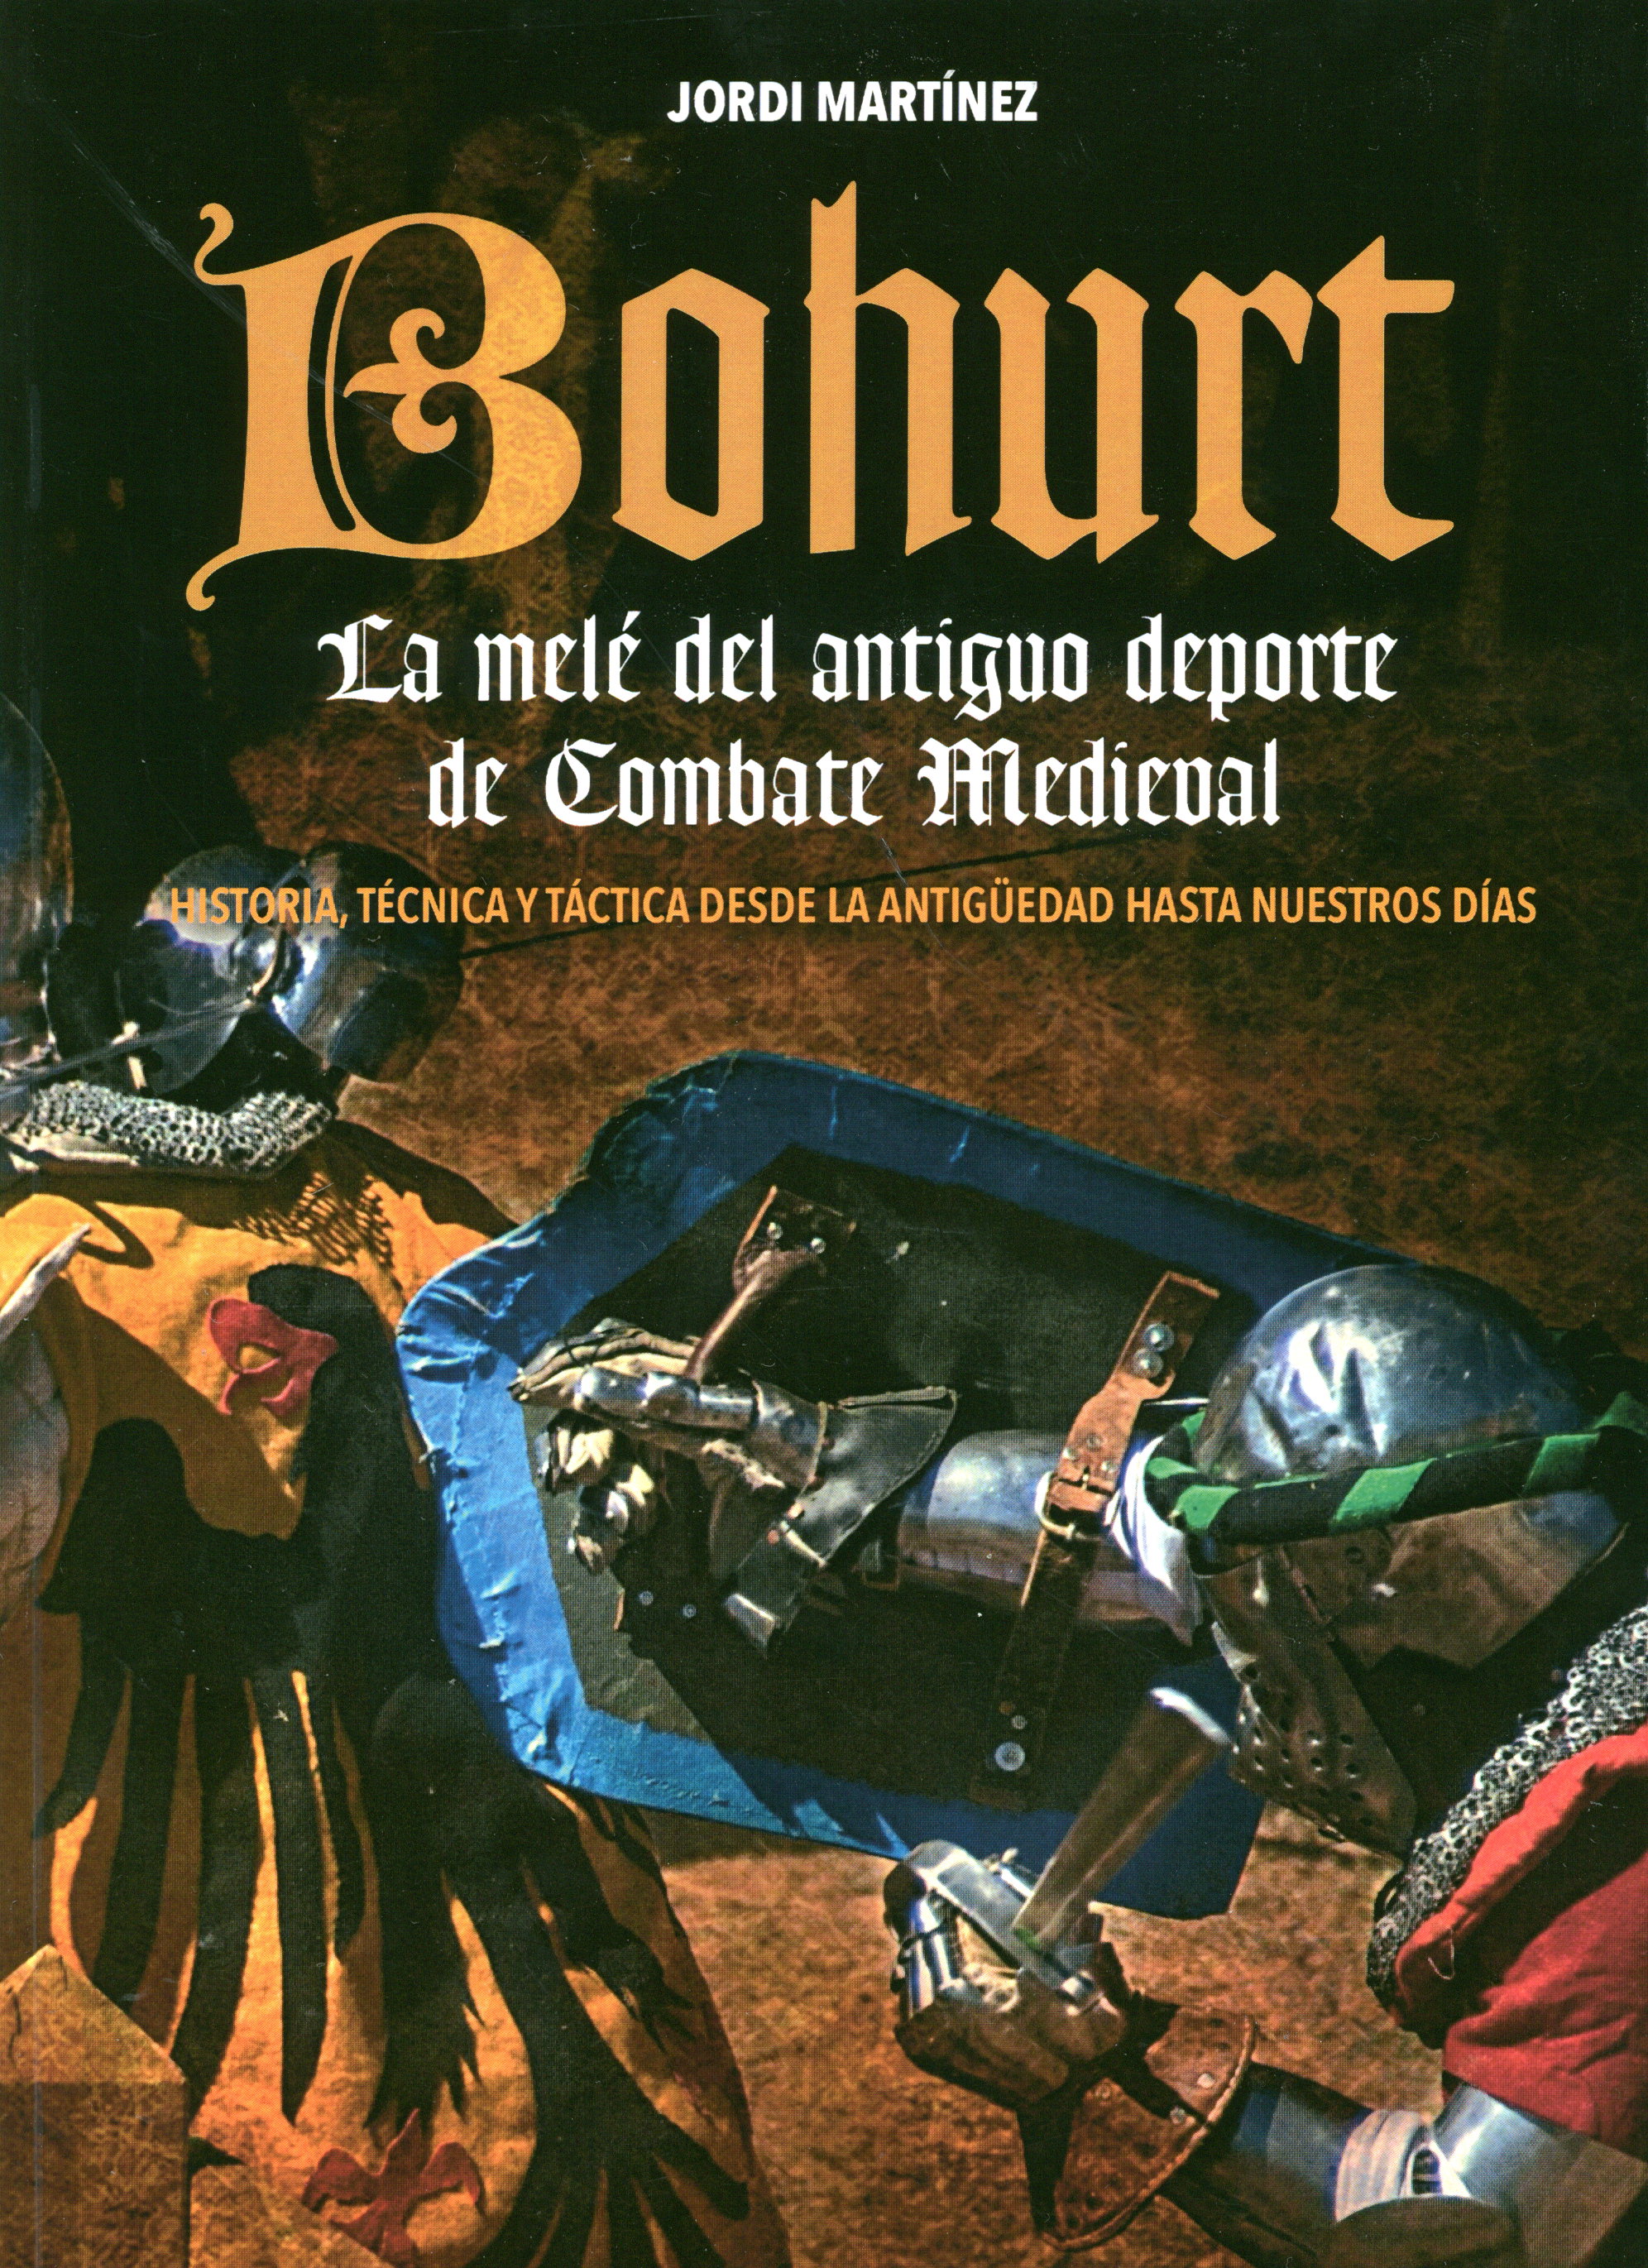 
            Bohurt. La melé del antiguo deporte de Combate Medieval